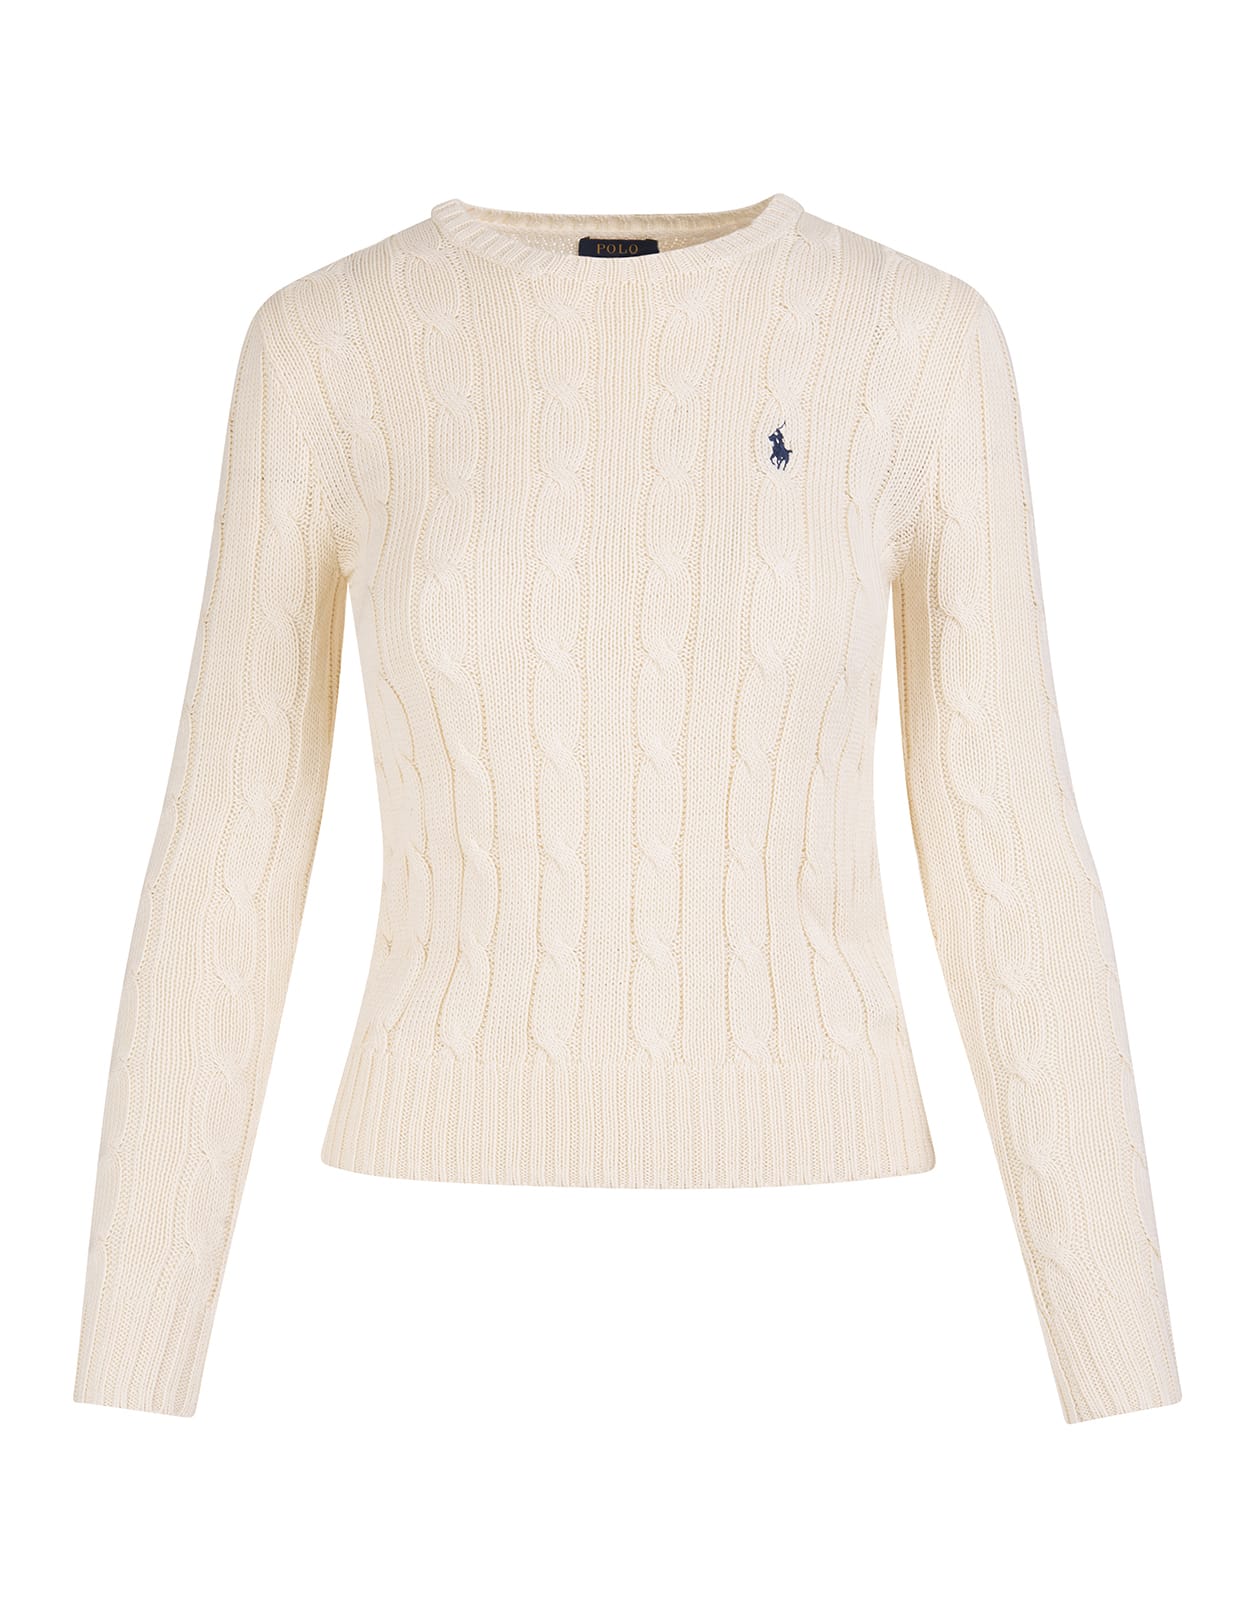 Ralph Lauren Woman Slim Fit Cream Cable Sweater